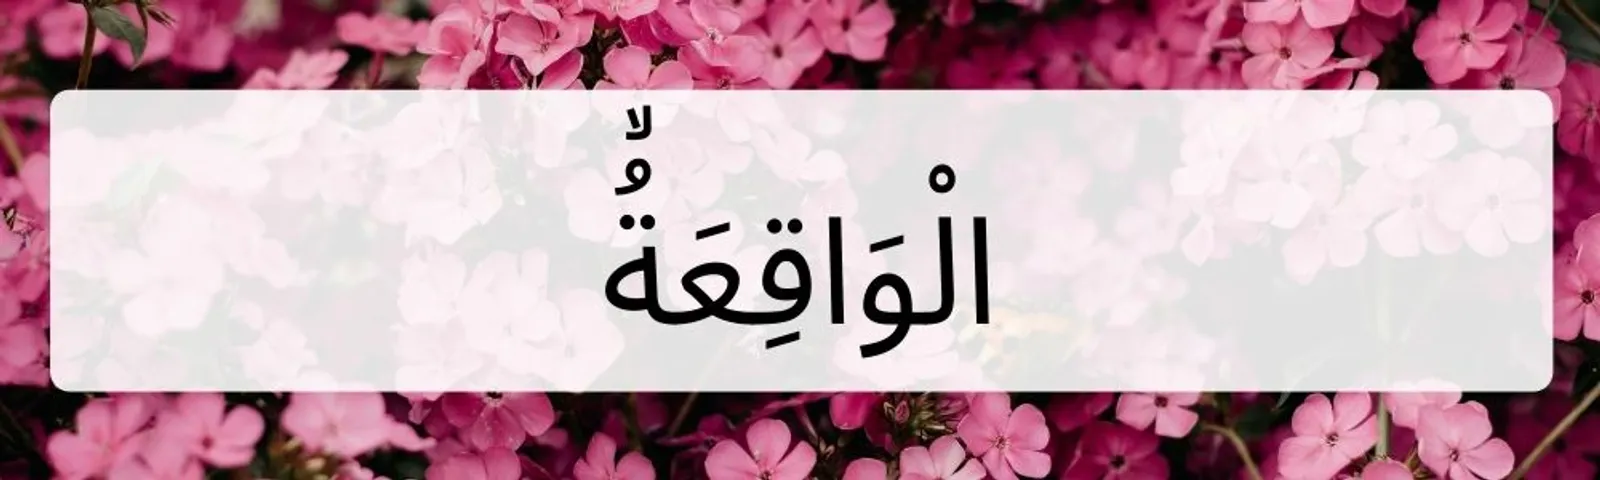 Bacaan Surat Al Waqiah Lengkap dengan Arab, Latin dan Artinya